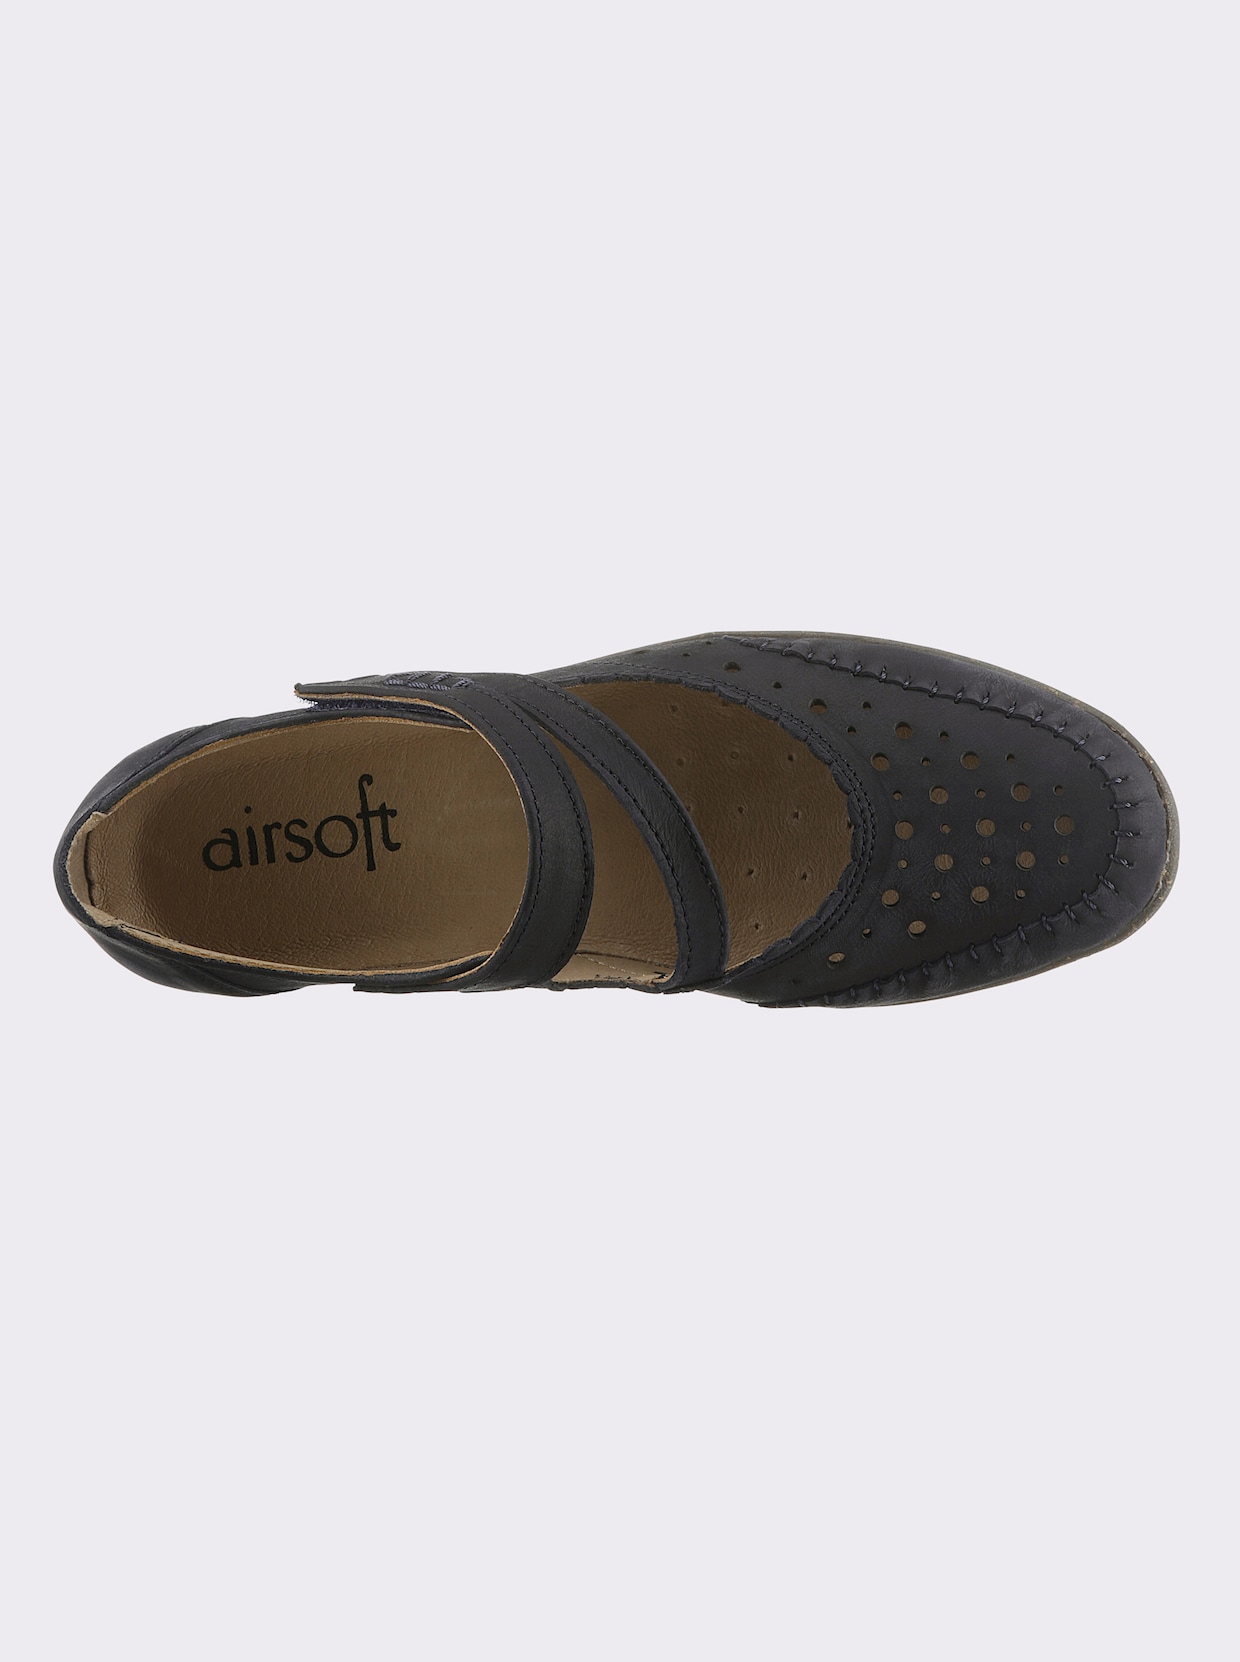 airsoft comfort+ Chaussures à bandes auto-agrippantes - marine